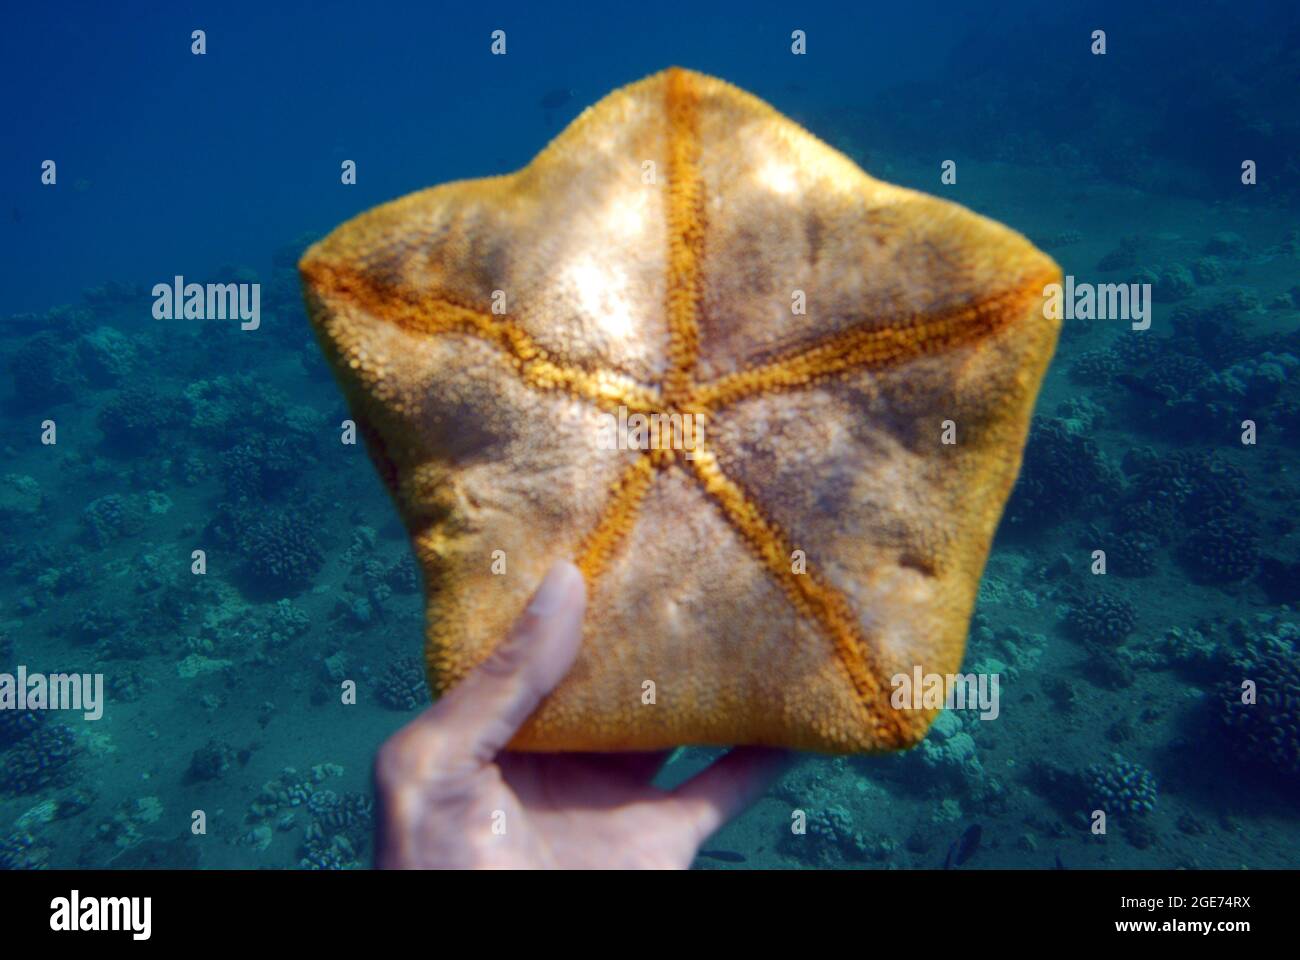 Person holding a sea sponge underwater Stock Photo